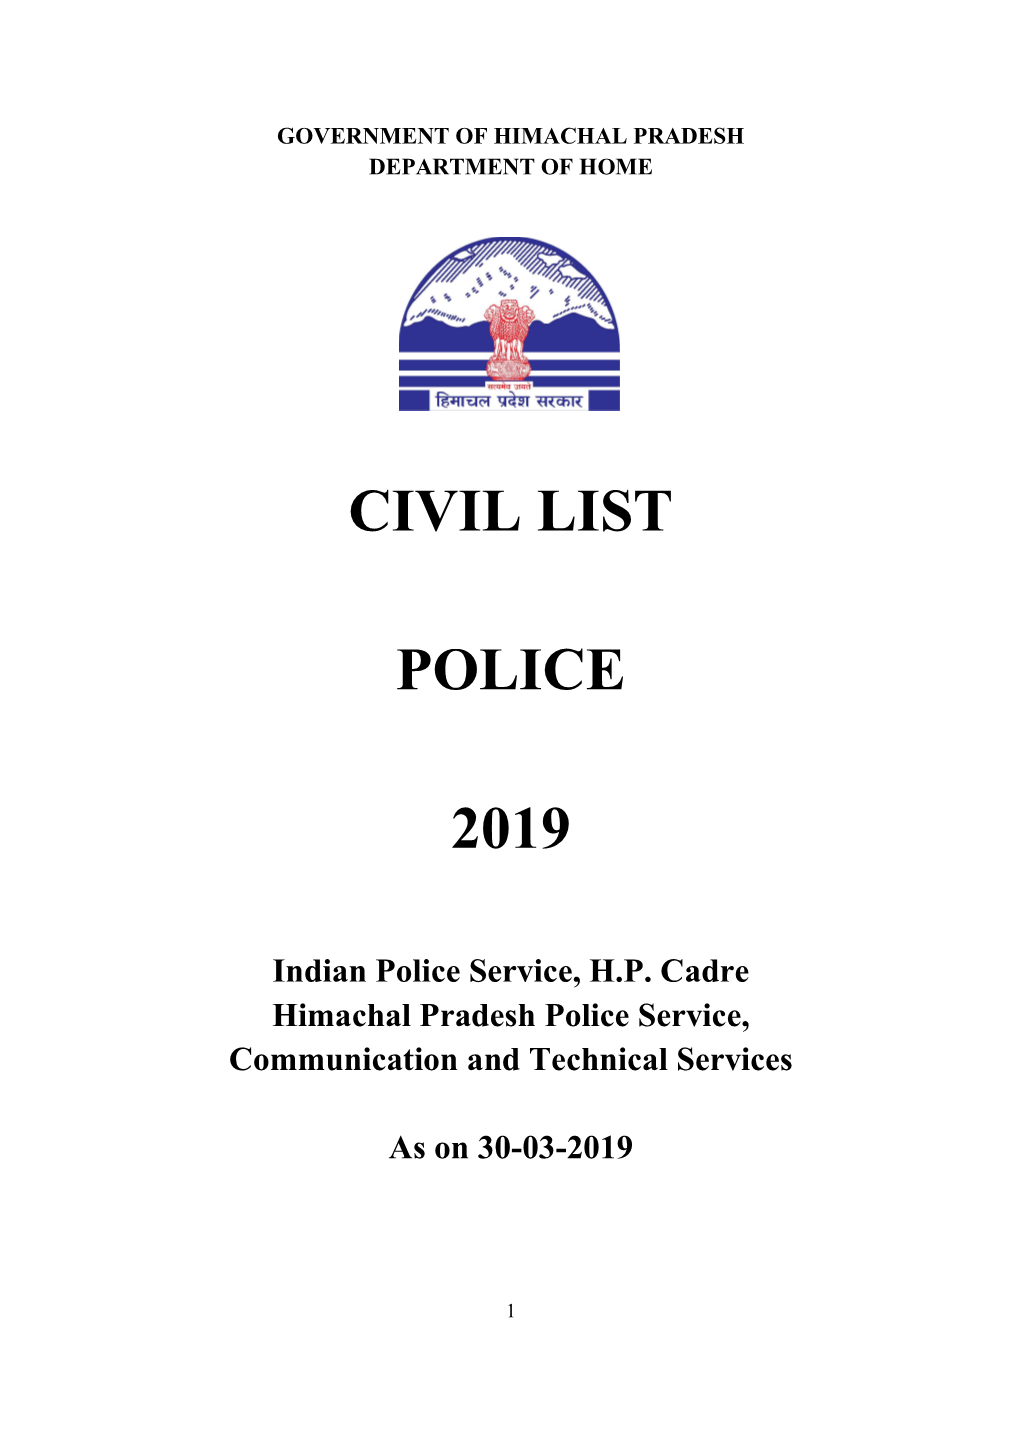 Civil List Police 2019